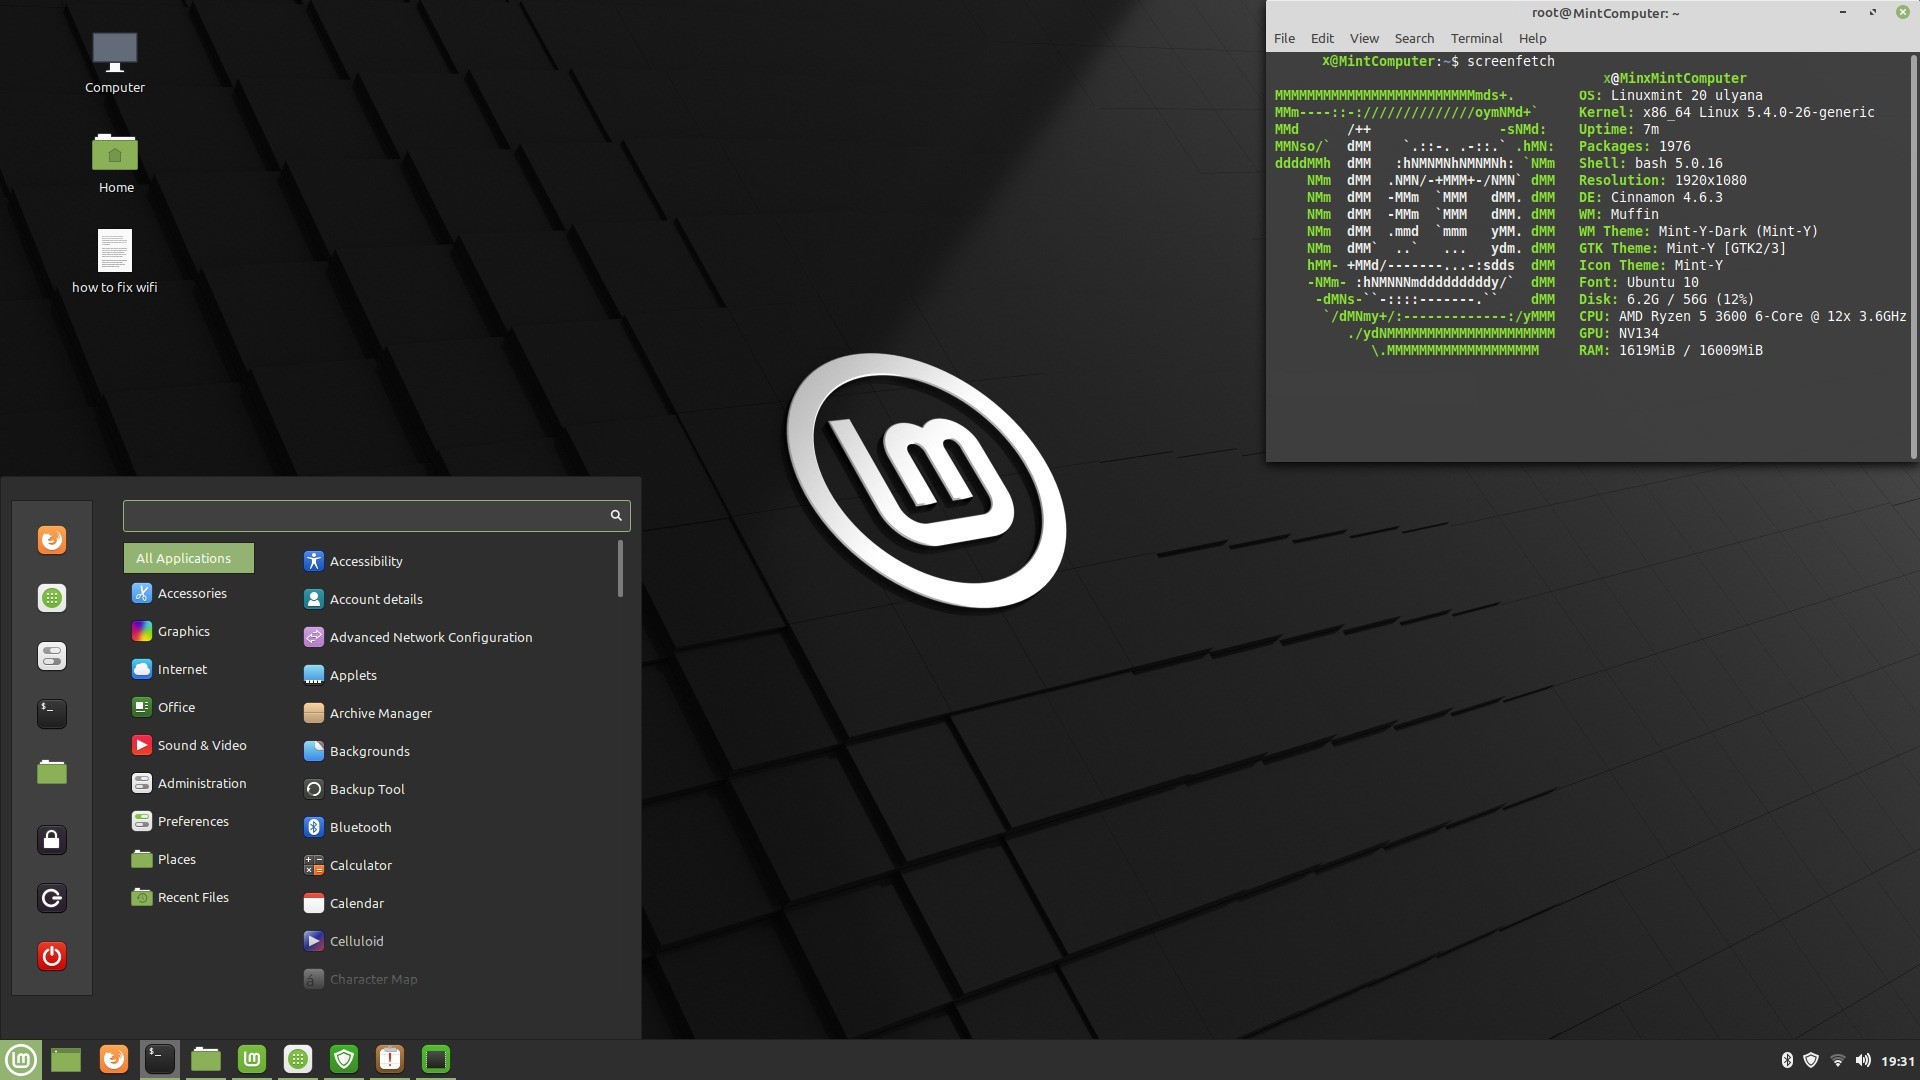 linux mint how to get complete desktop on mac